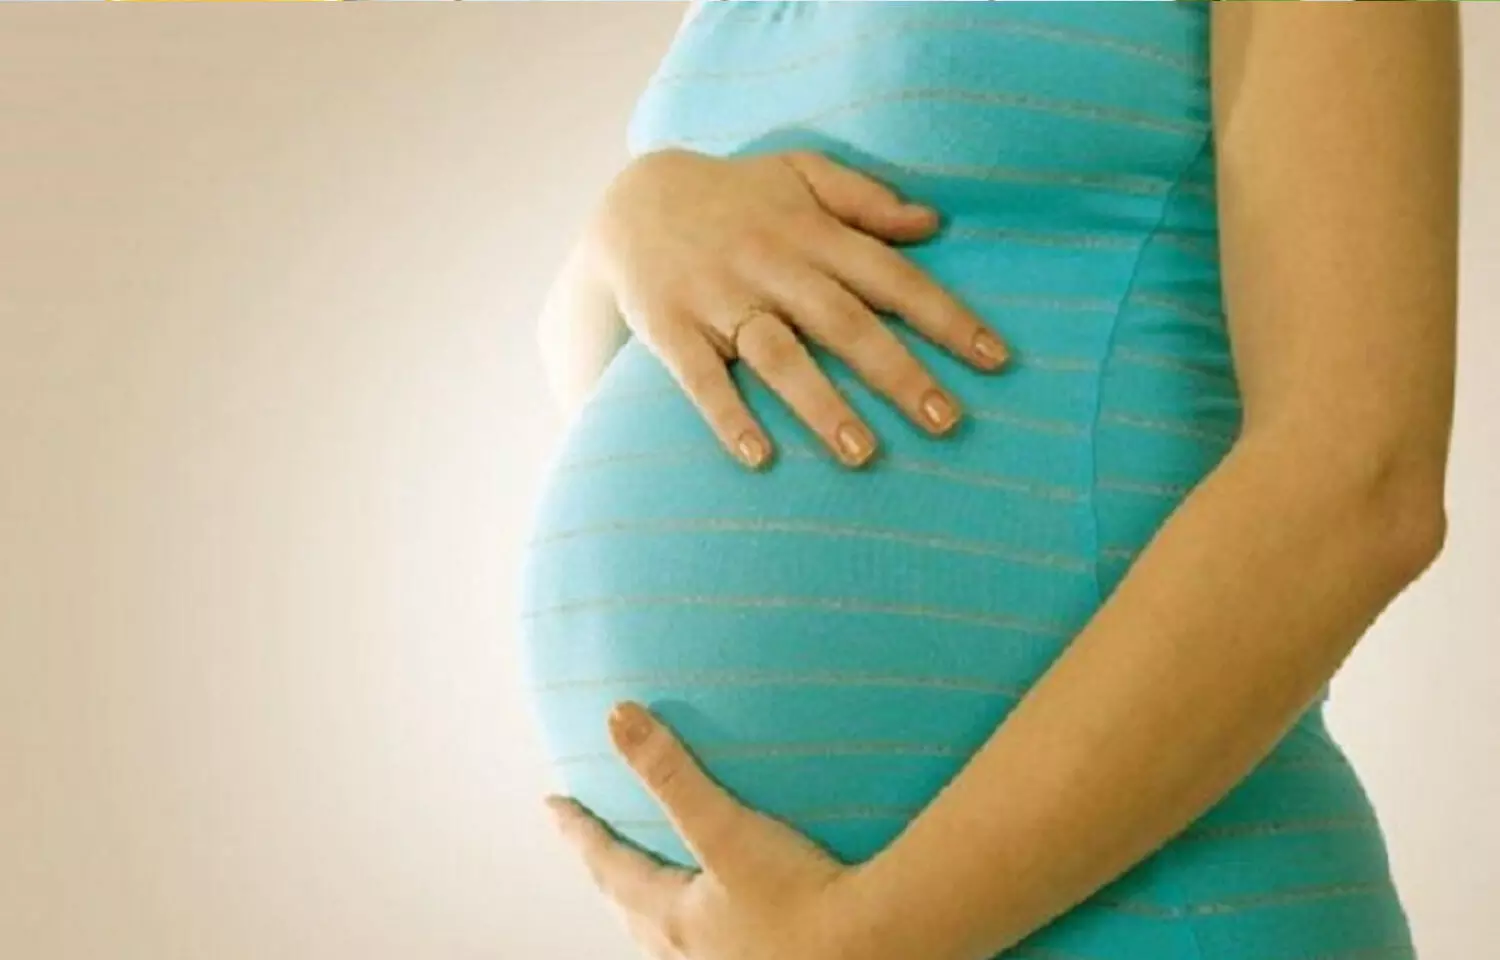 From infertility to joy of parenthood via surrogacy - The Surrogacy Regulation Bill India